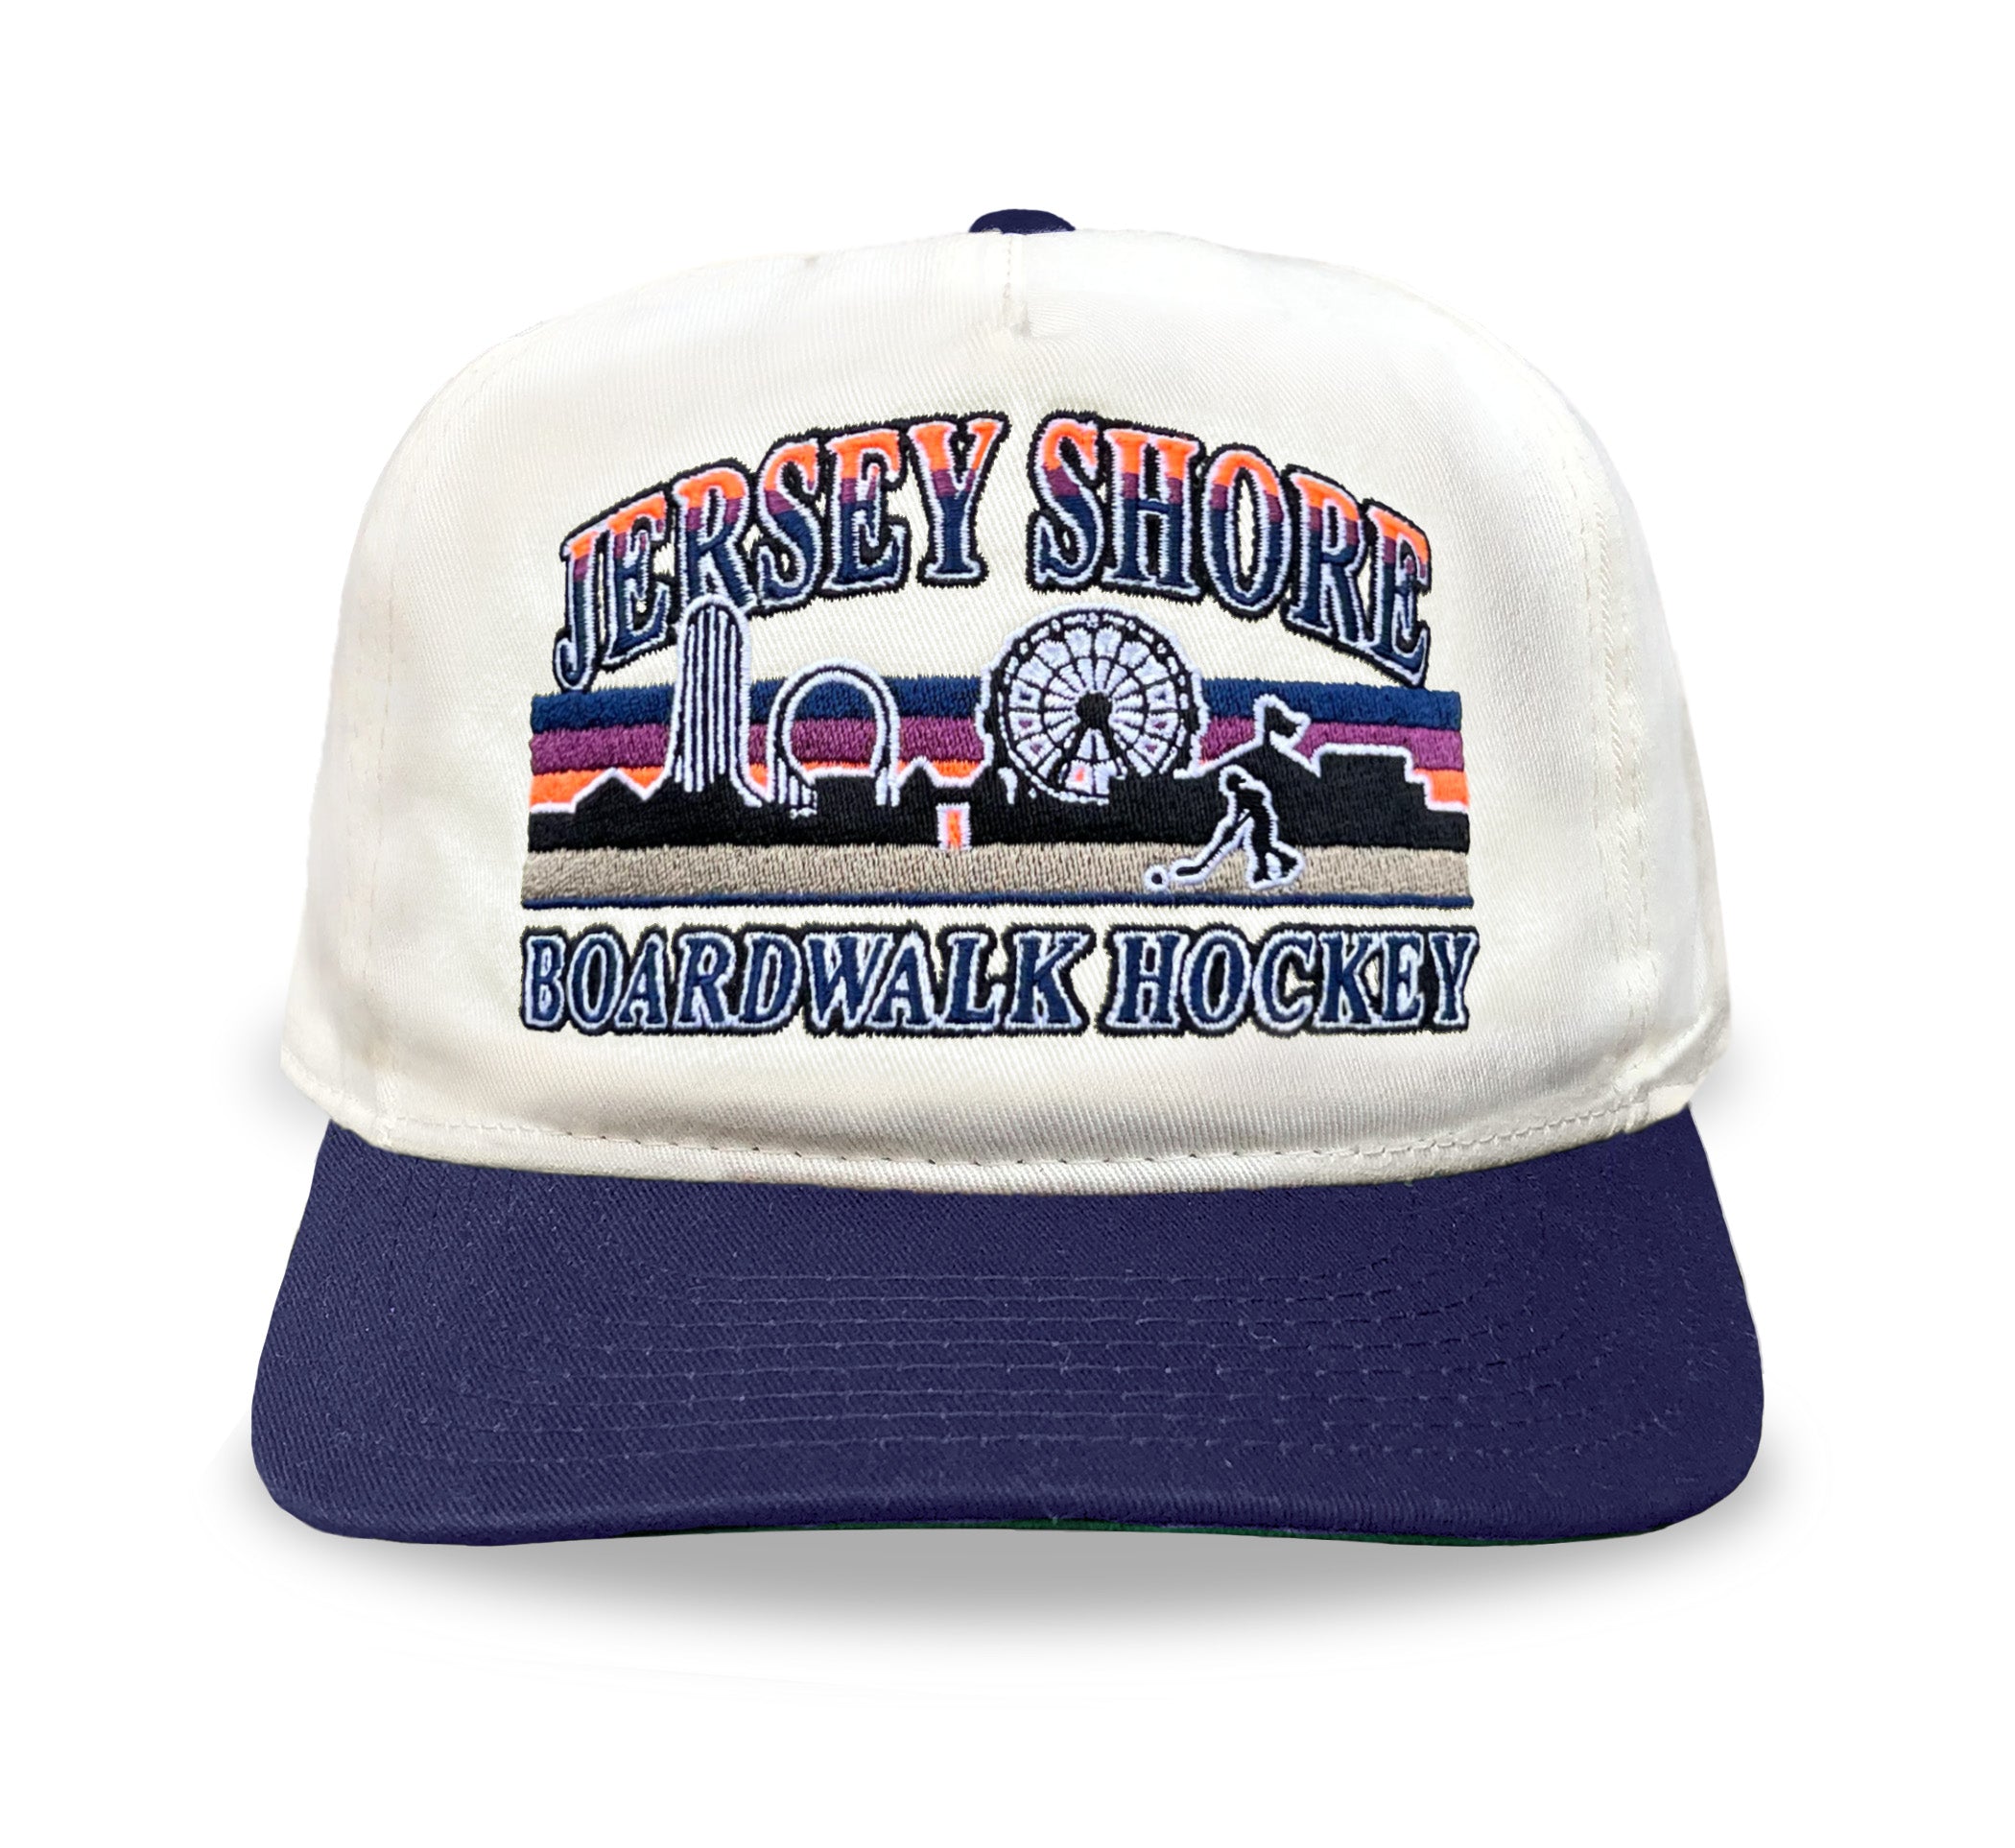 Jersey Shore Boardwalk Hockey Snapback Cream